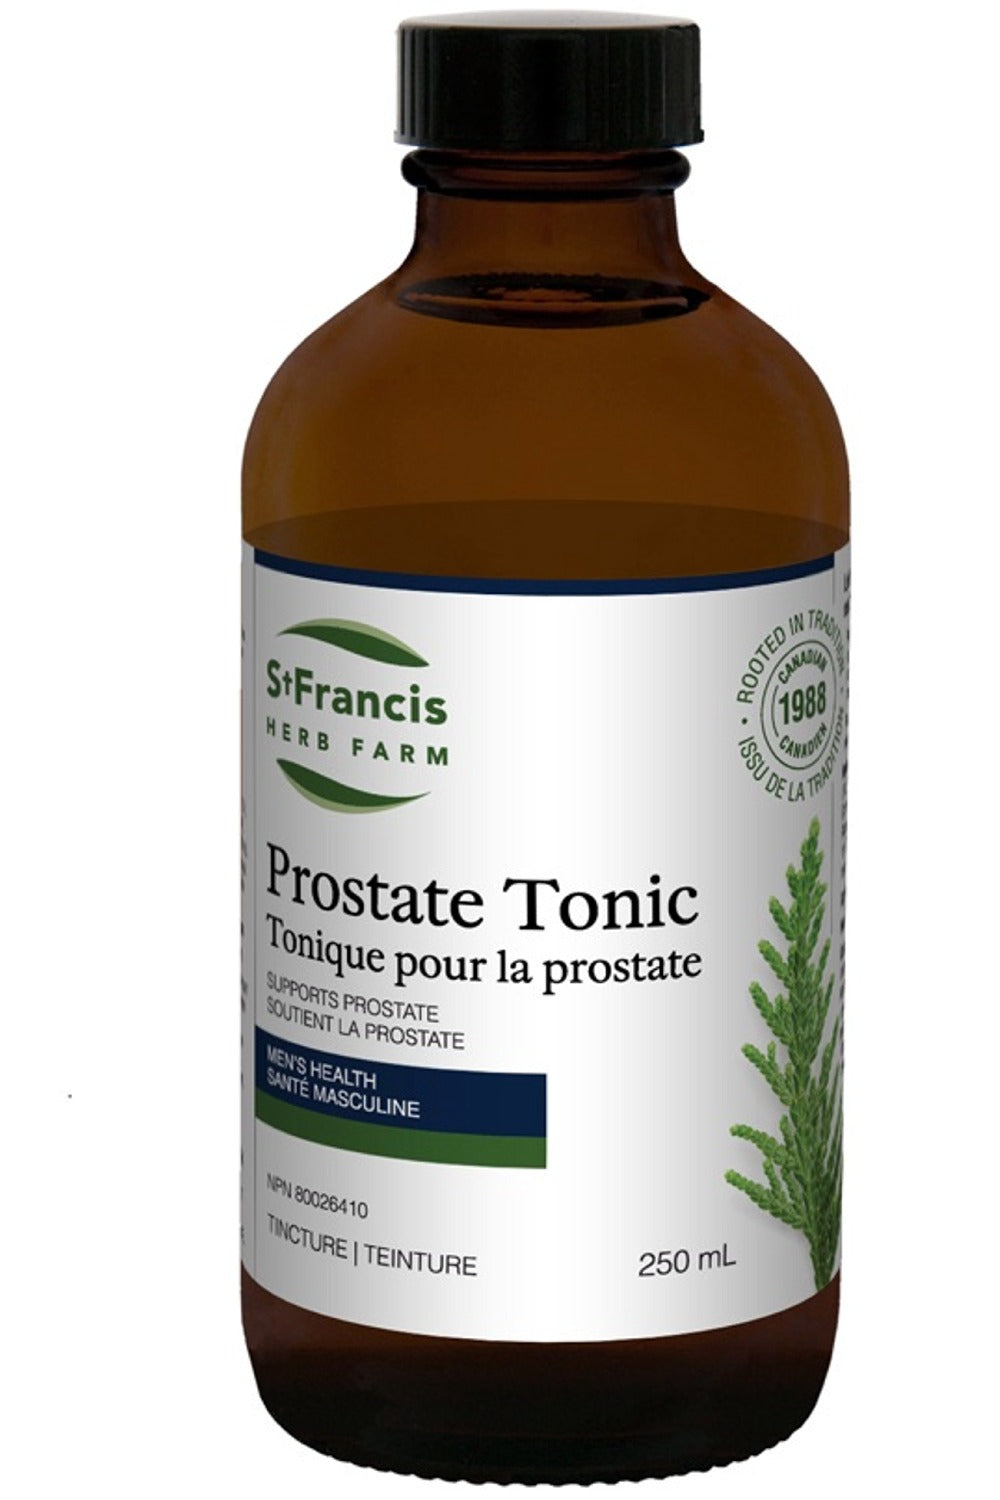 ST FRANCIS HERB FARM Prostate Tonic (250 ml)